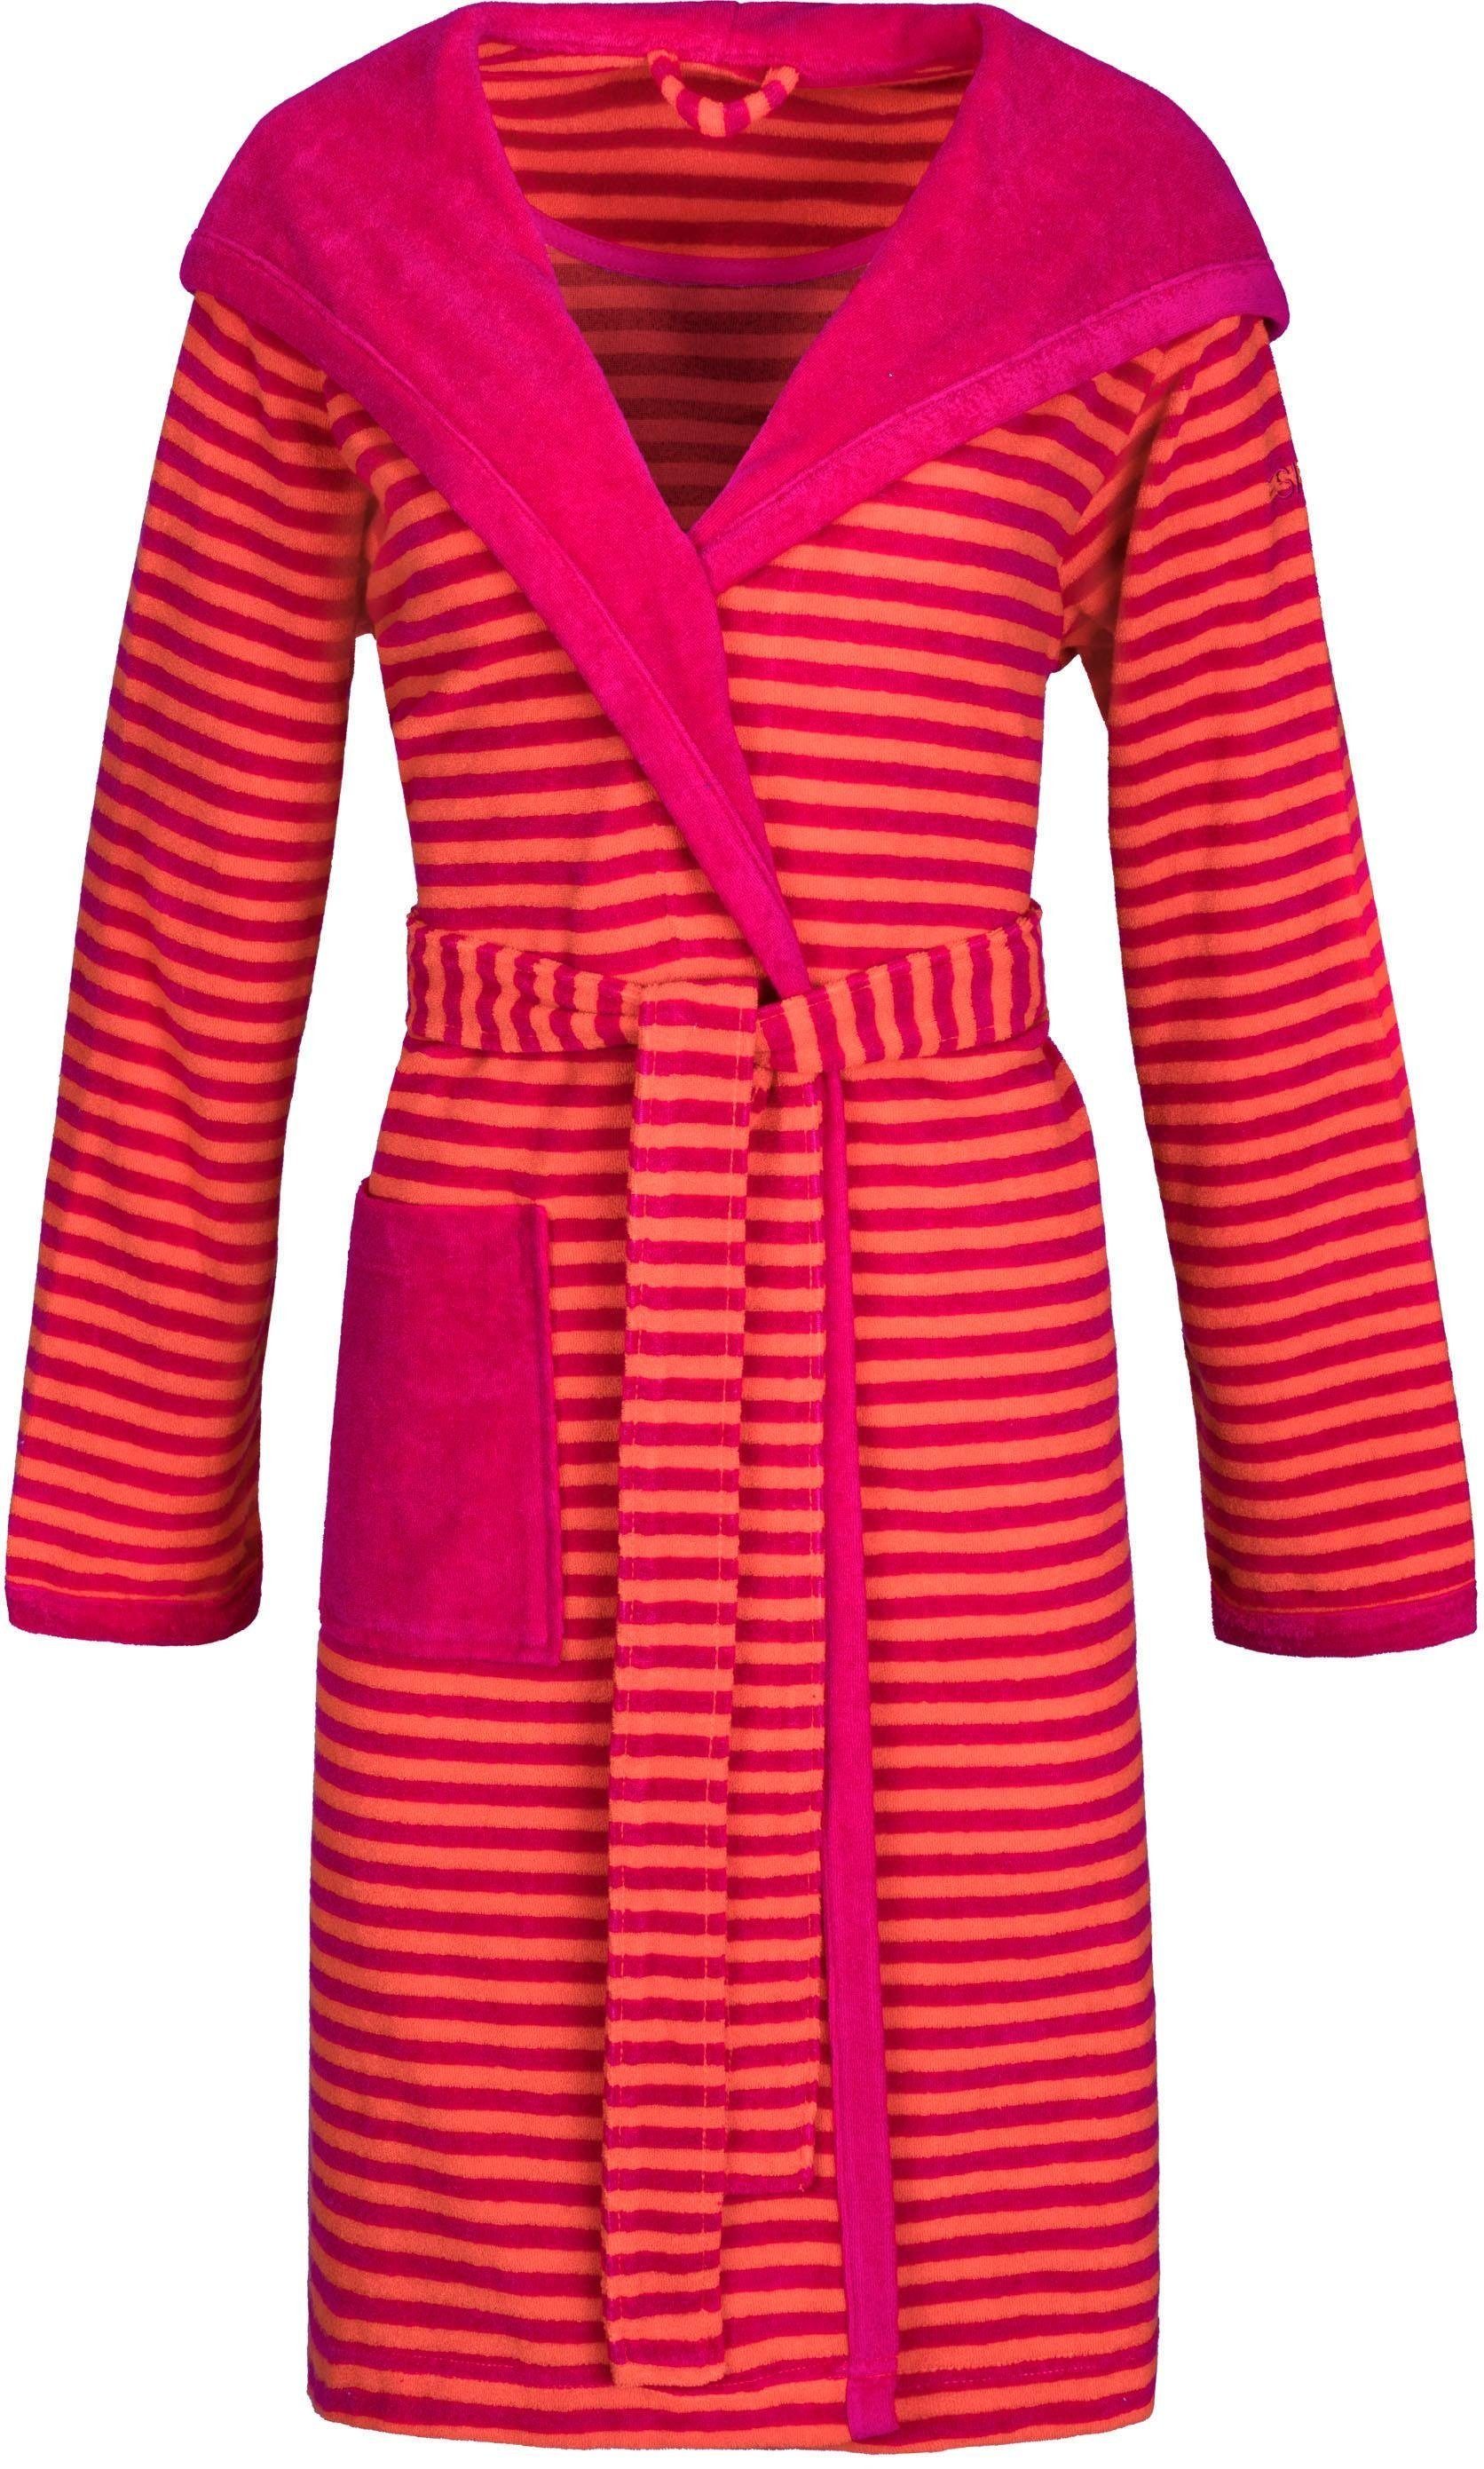 Esprit Damenbademantel Striped Hoody, Kurzform, Rundstrickware, Kapuze, Gürtel, mit Kapuze, gestreift raspberry